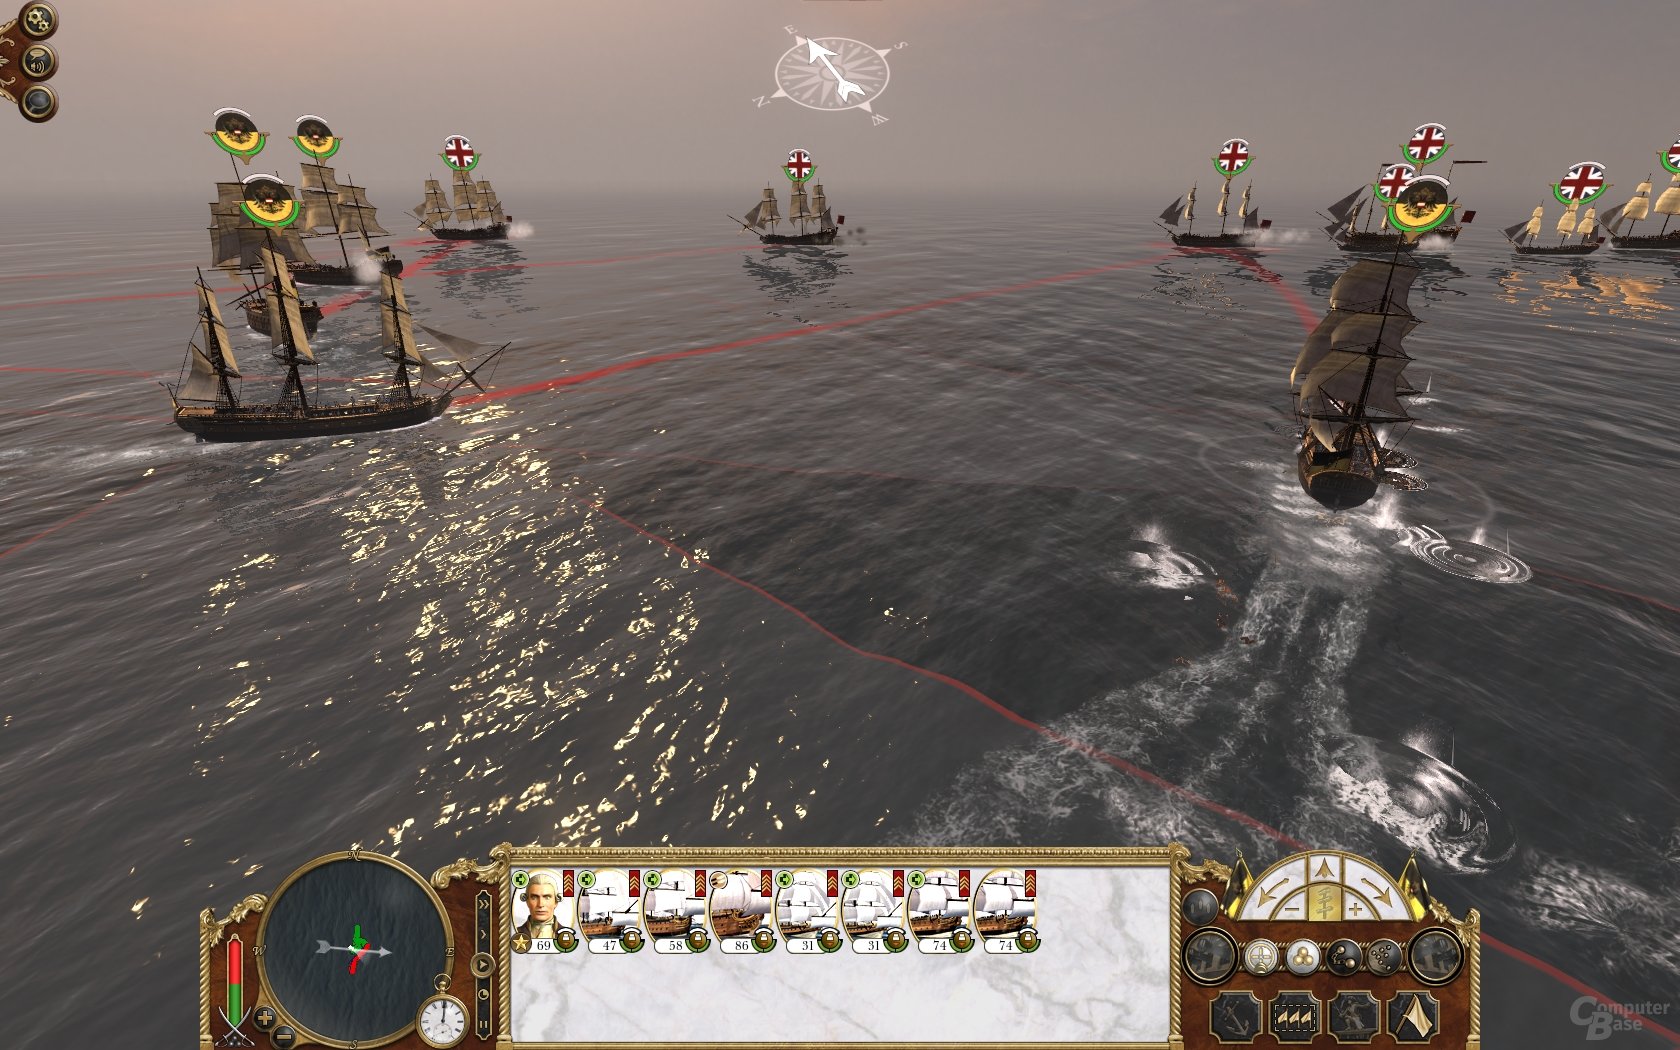 Empire: Total War